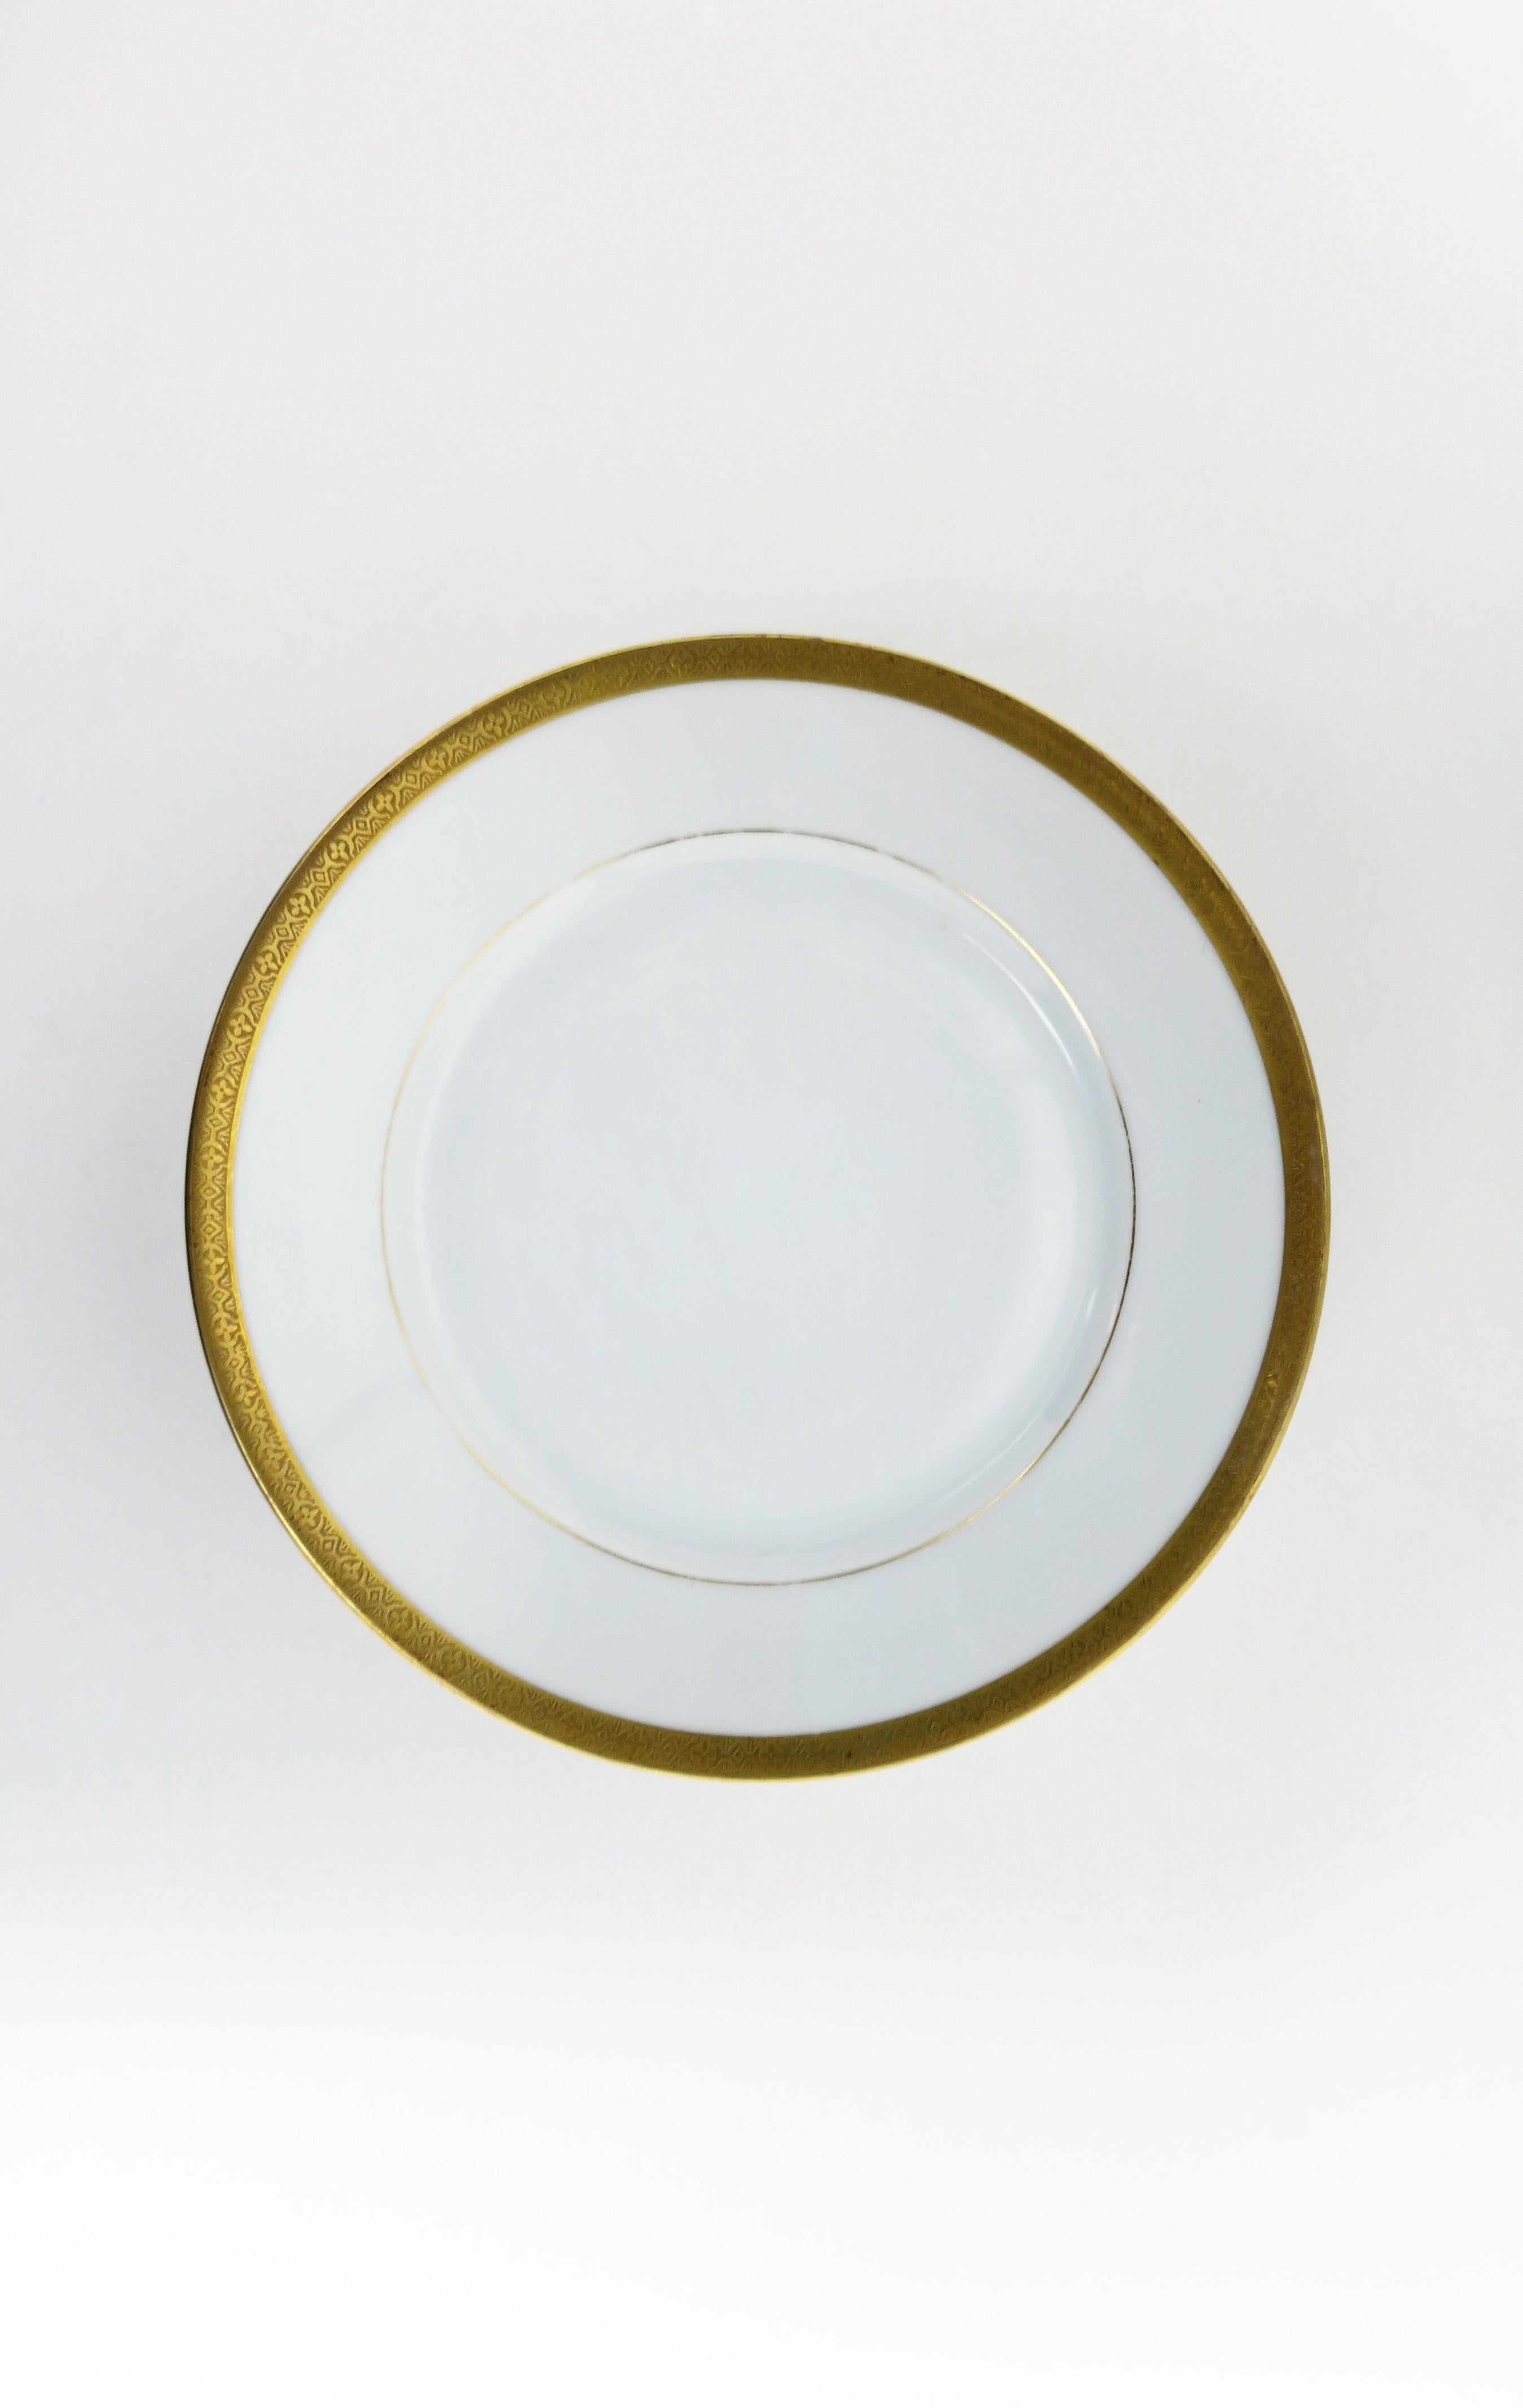 Austrian White Porcelain Plates with Gold Edge, Set of 10 1